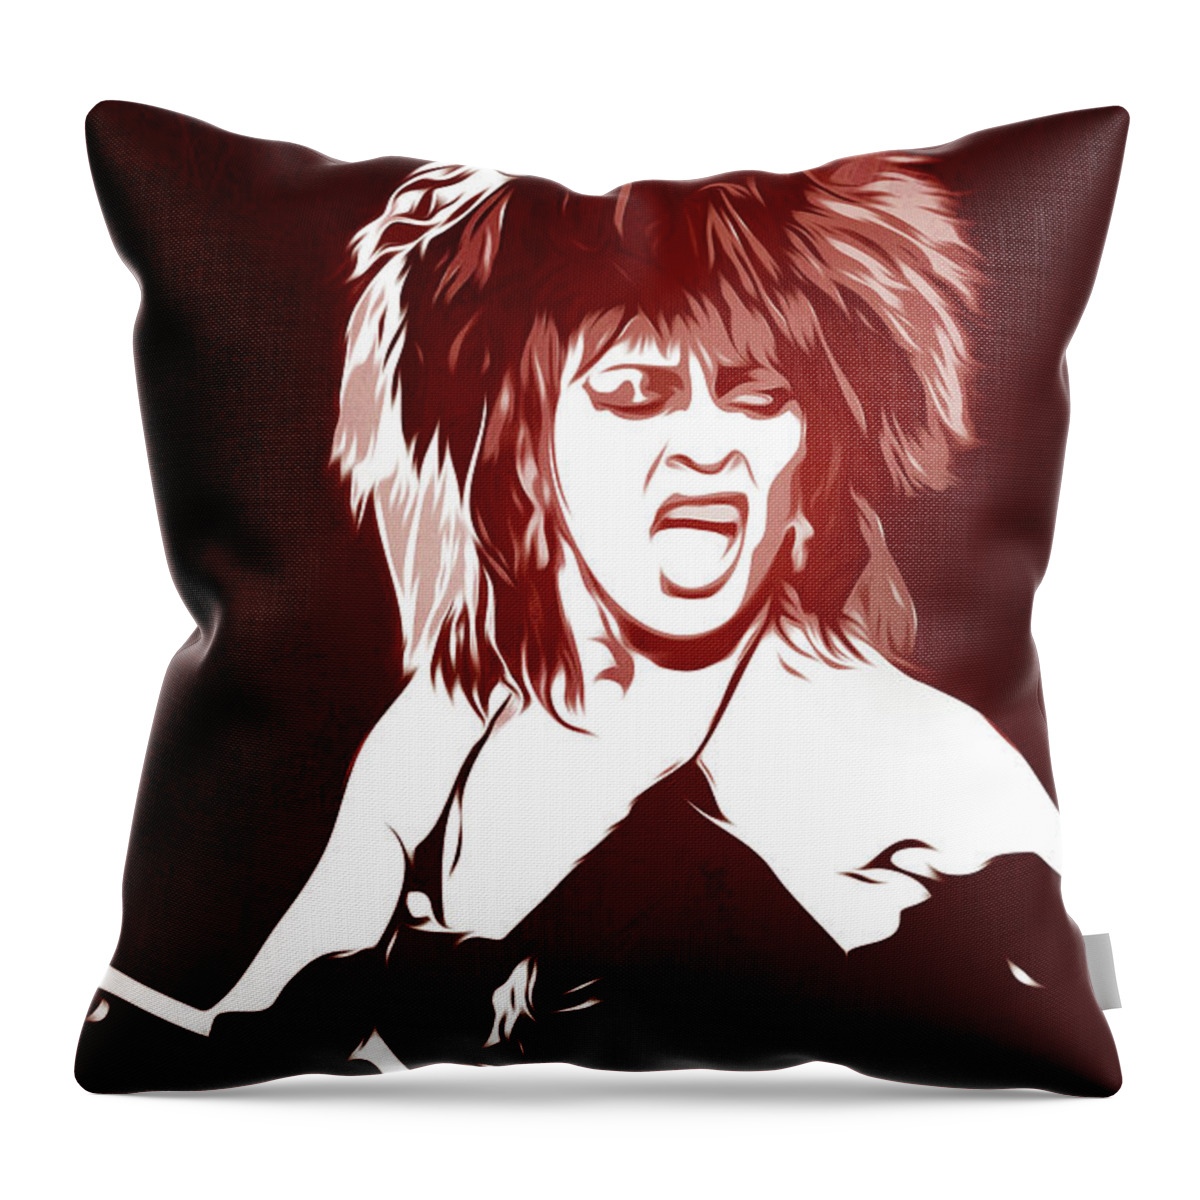 Art Throw Pillow featuring the digital art Tina Turner - Pop Art - Digital Art by William Cuccio aka WCSmack